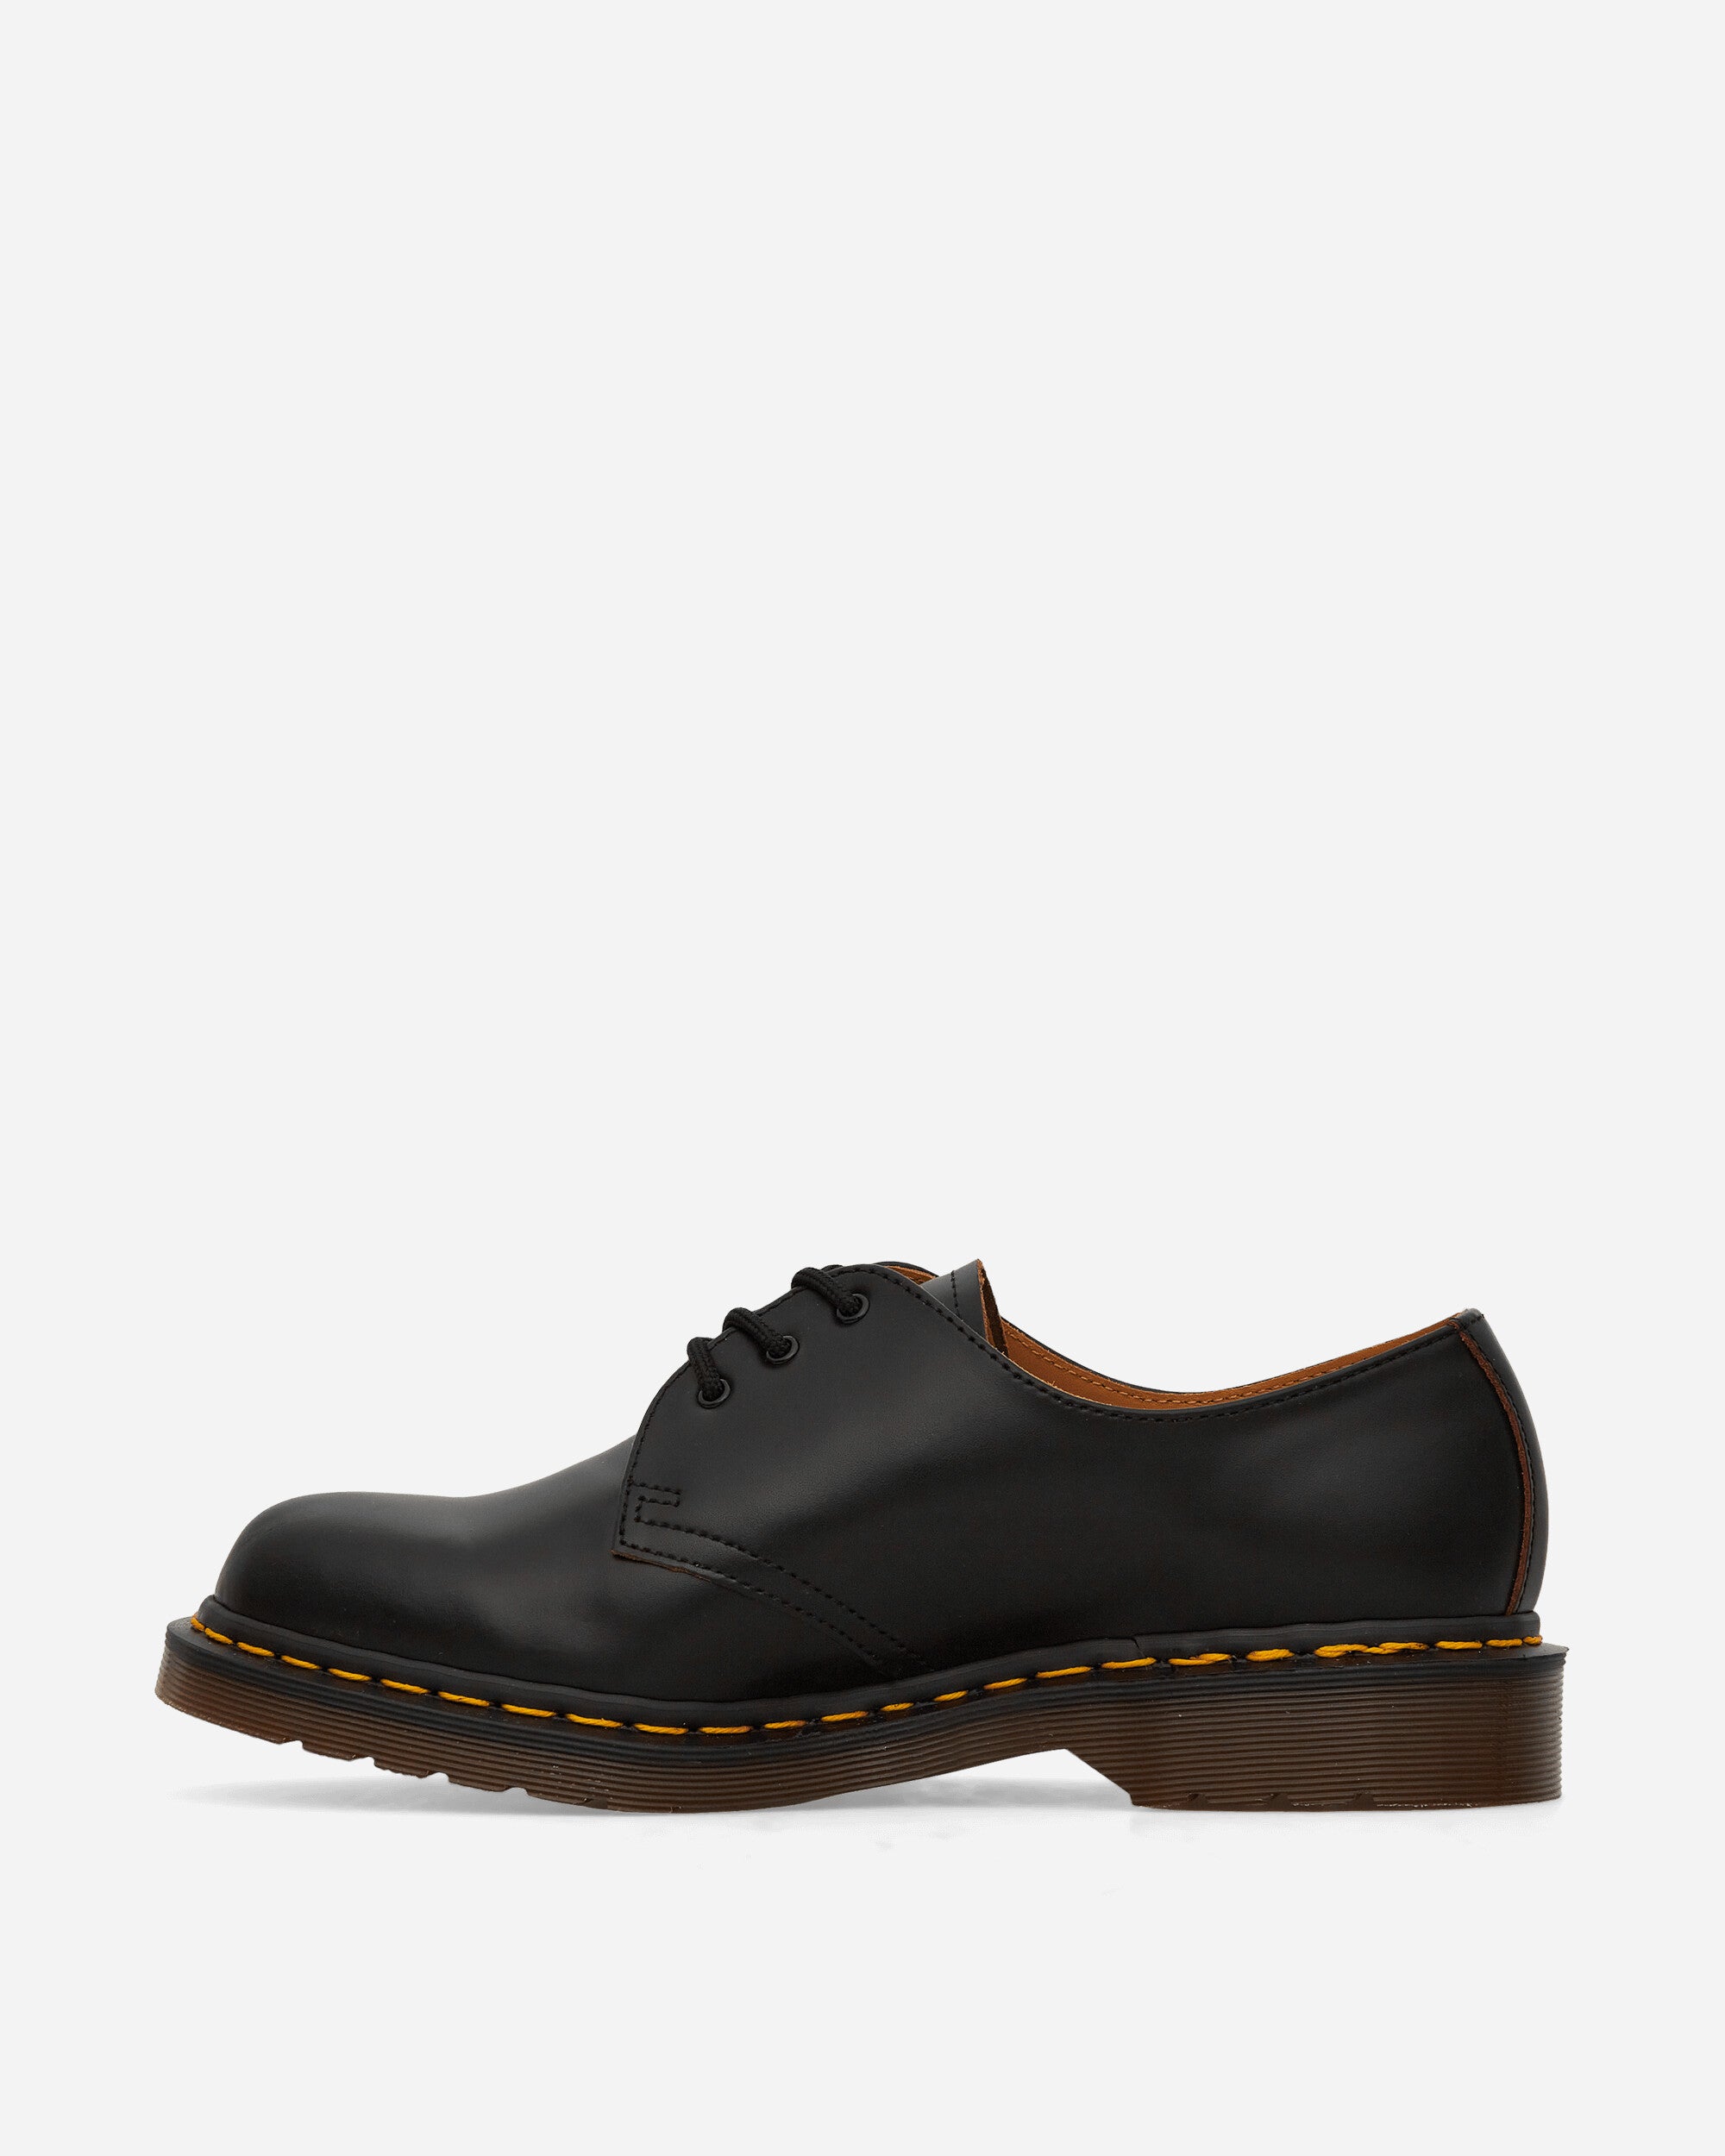 Dr. Martens Vintage 1461 Black Classic Shoes Laced Up 12877001 BLACK